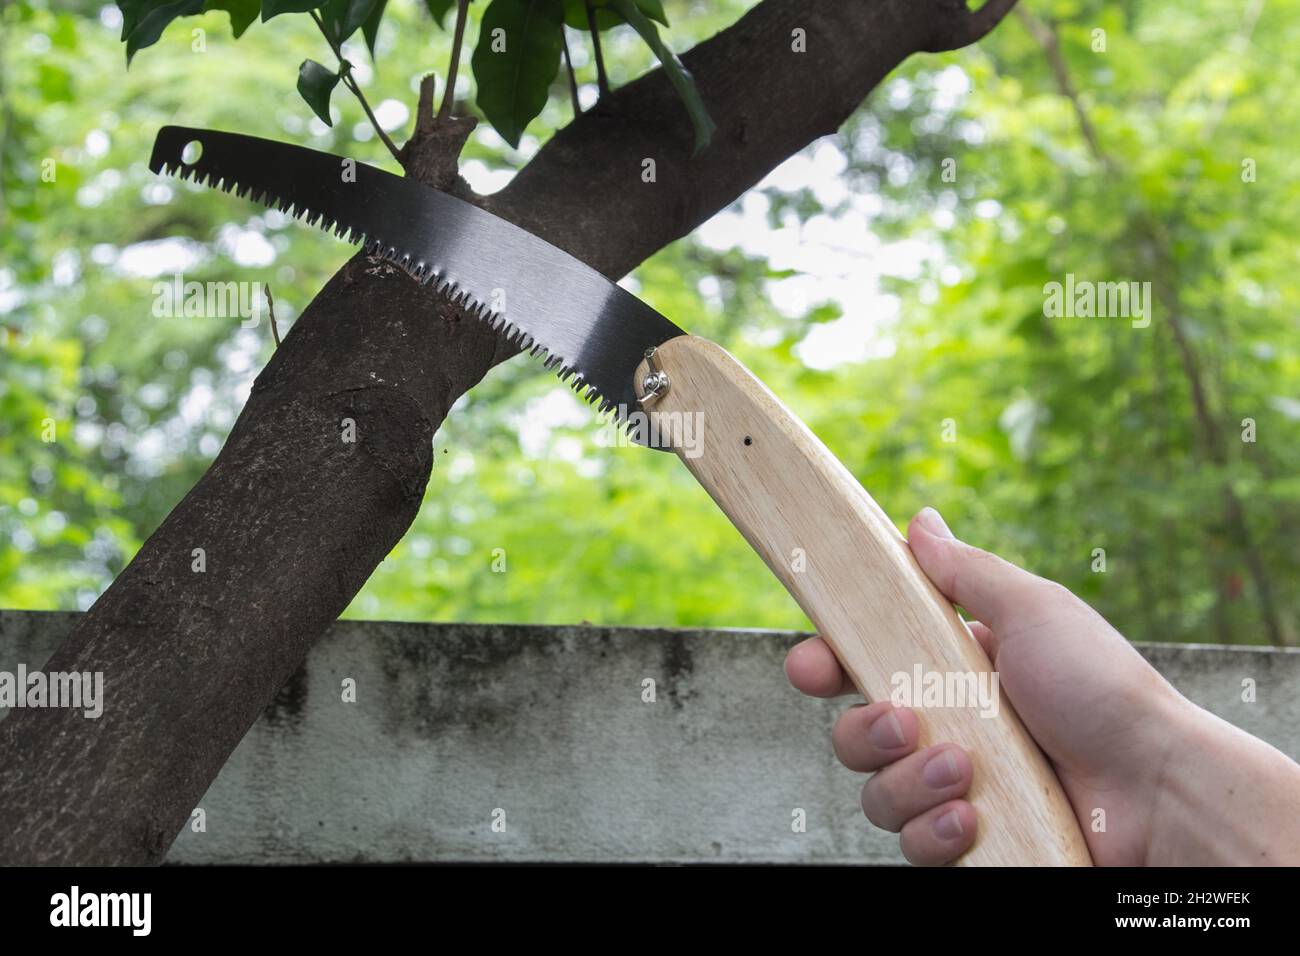 Man hand sawing tree branch by folding garden saw, gardening tool Stock Photo